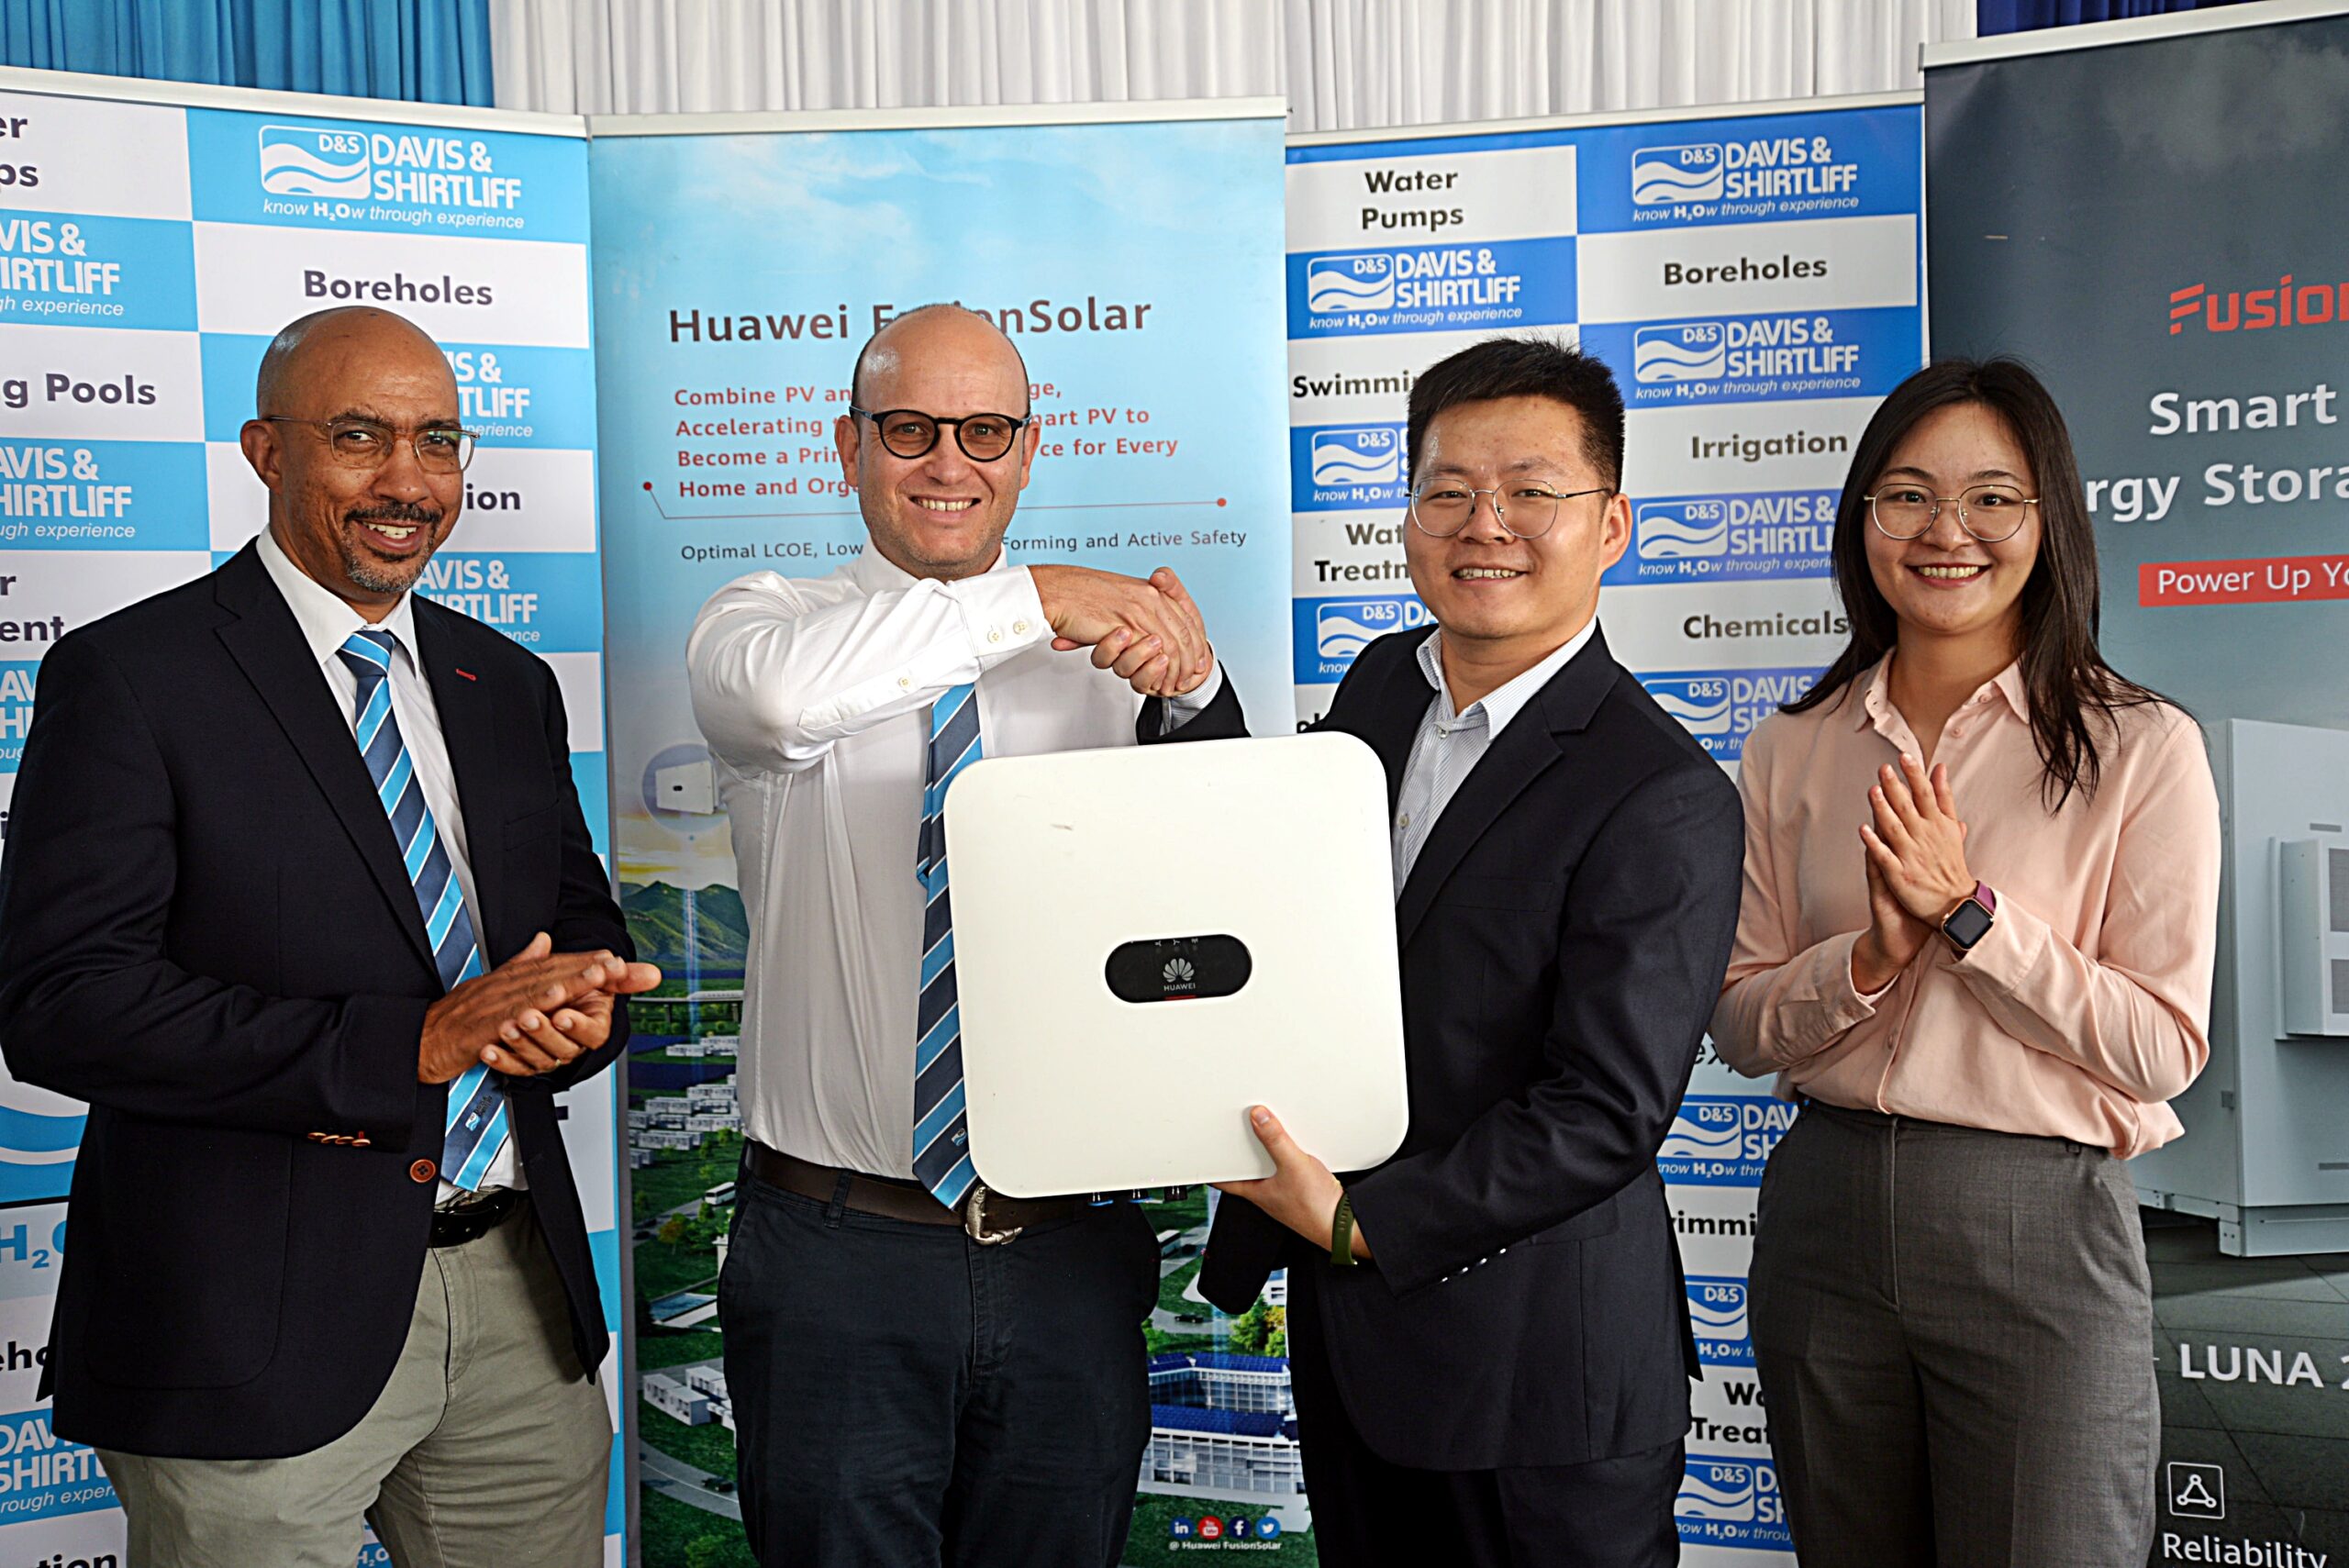 Davis & Shirtliff, Huawei Partner To Provide Solar Products In Kenya